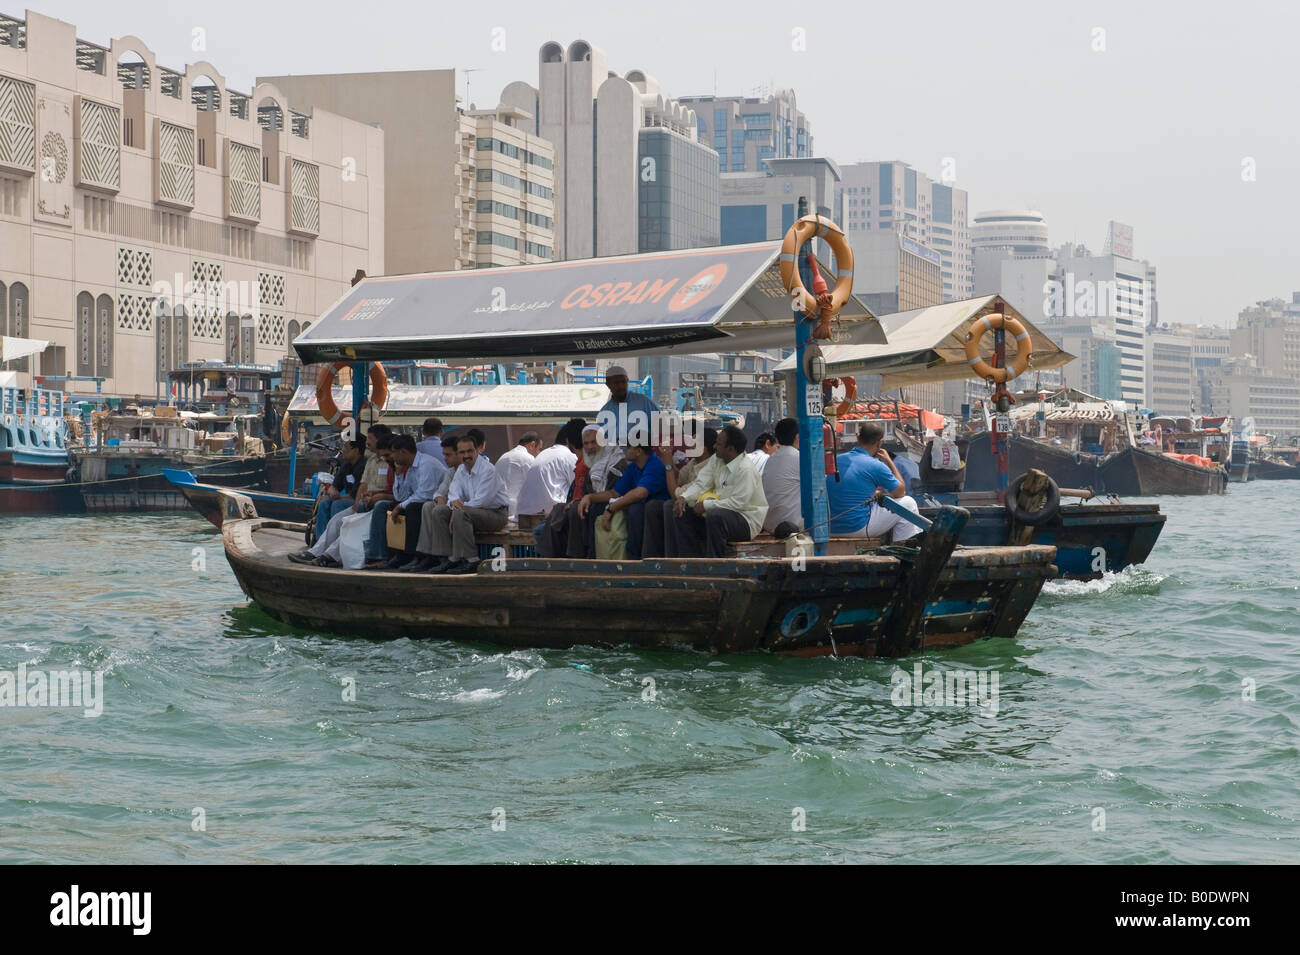 Dubai, United Arab Emirates (UAE). An abra (water taxi) taking passengers across Dubai Creek, which divides the city Stock Photo